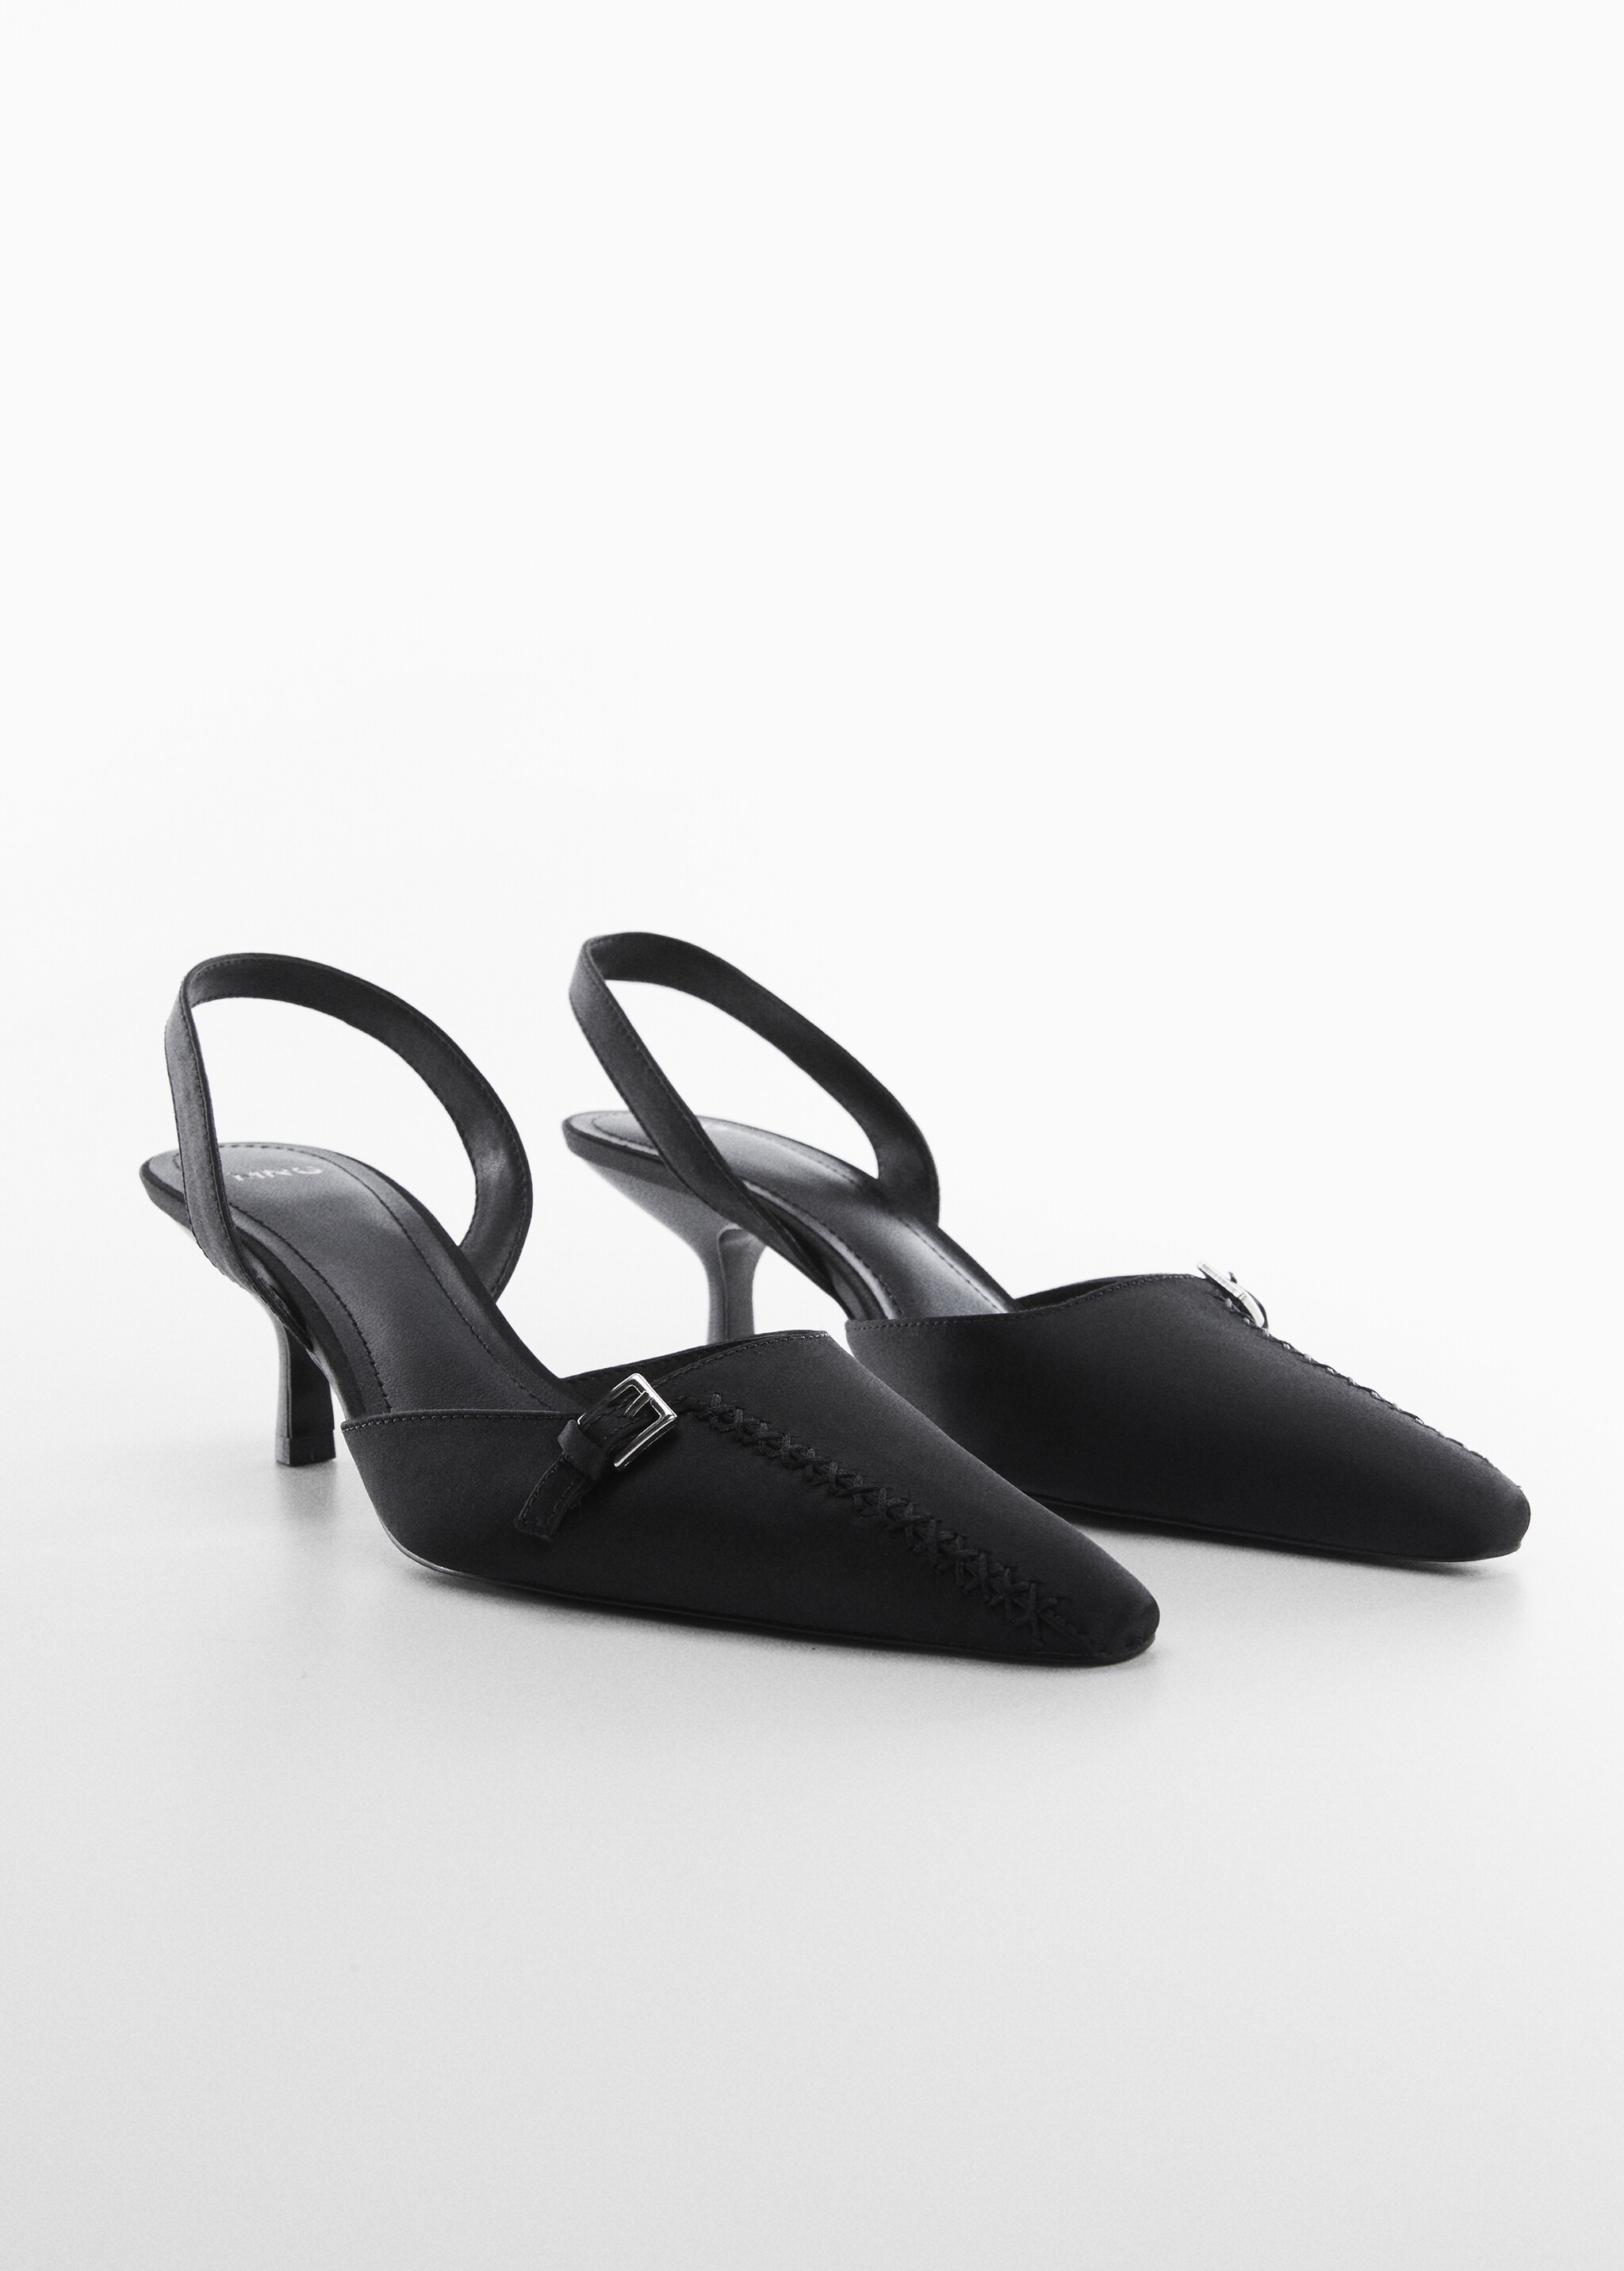 Satin heeled shoes - Medium plane